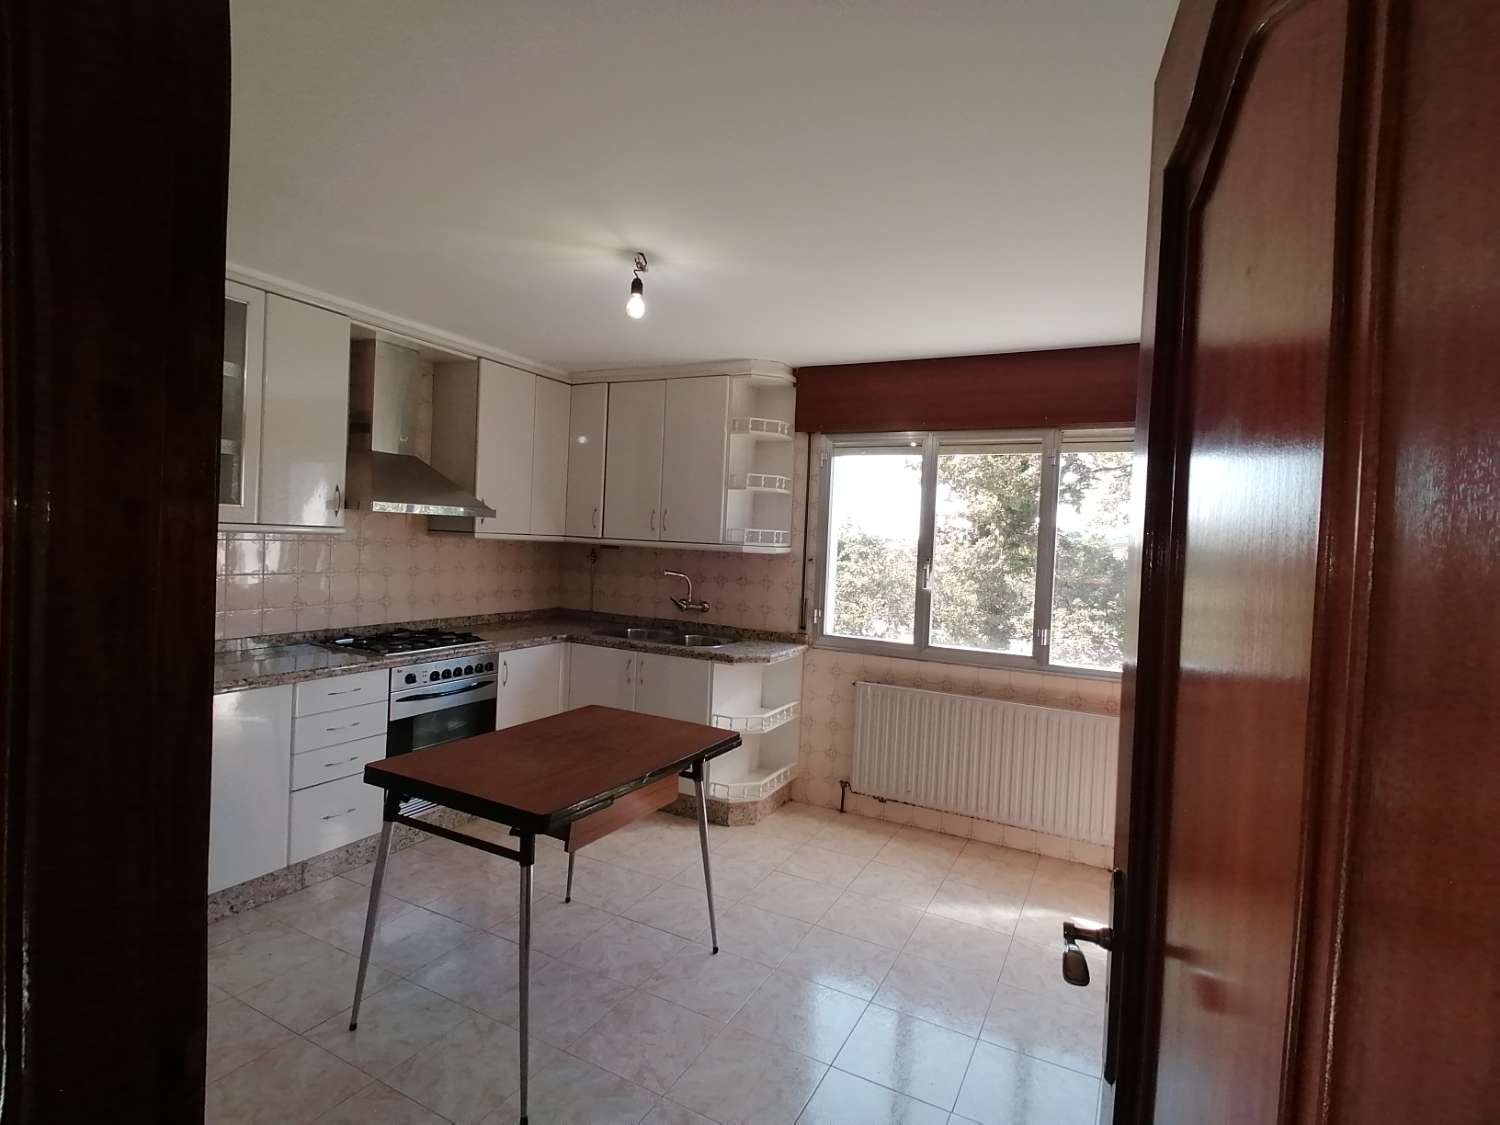 Pontevedra: A7134: Haus mit Finca zu verkaufen 4 km von Pontevedra entfernt...